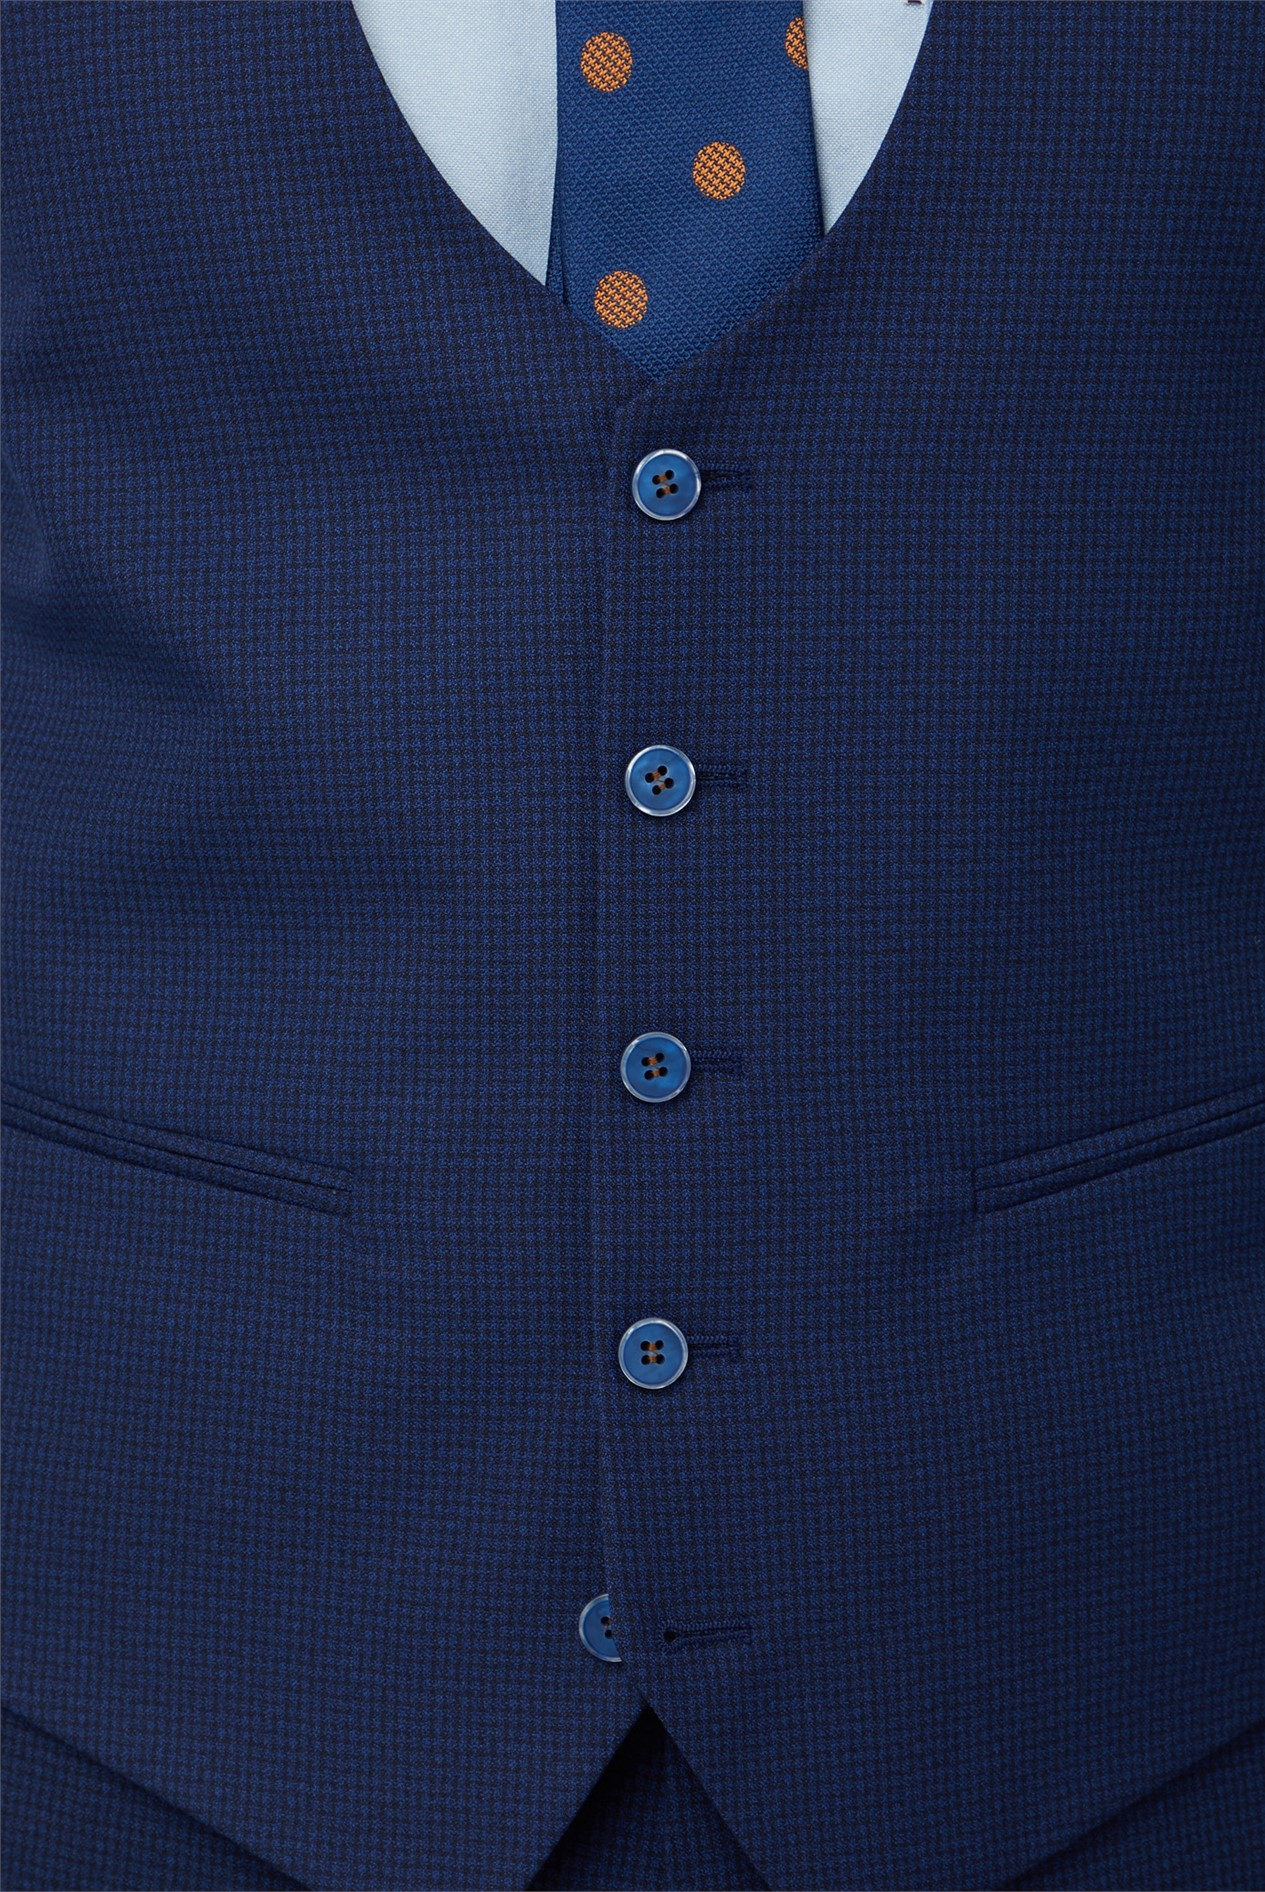 Cobalt Blue Waistcoat Vest Checked Graph - Brand New